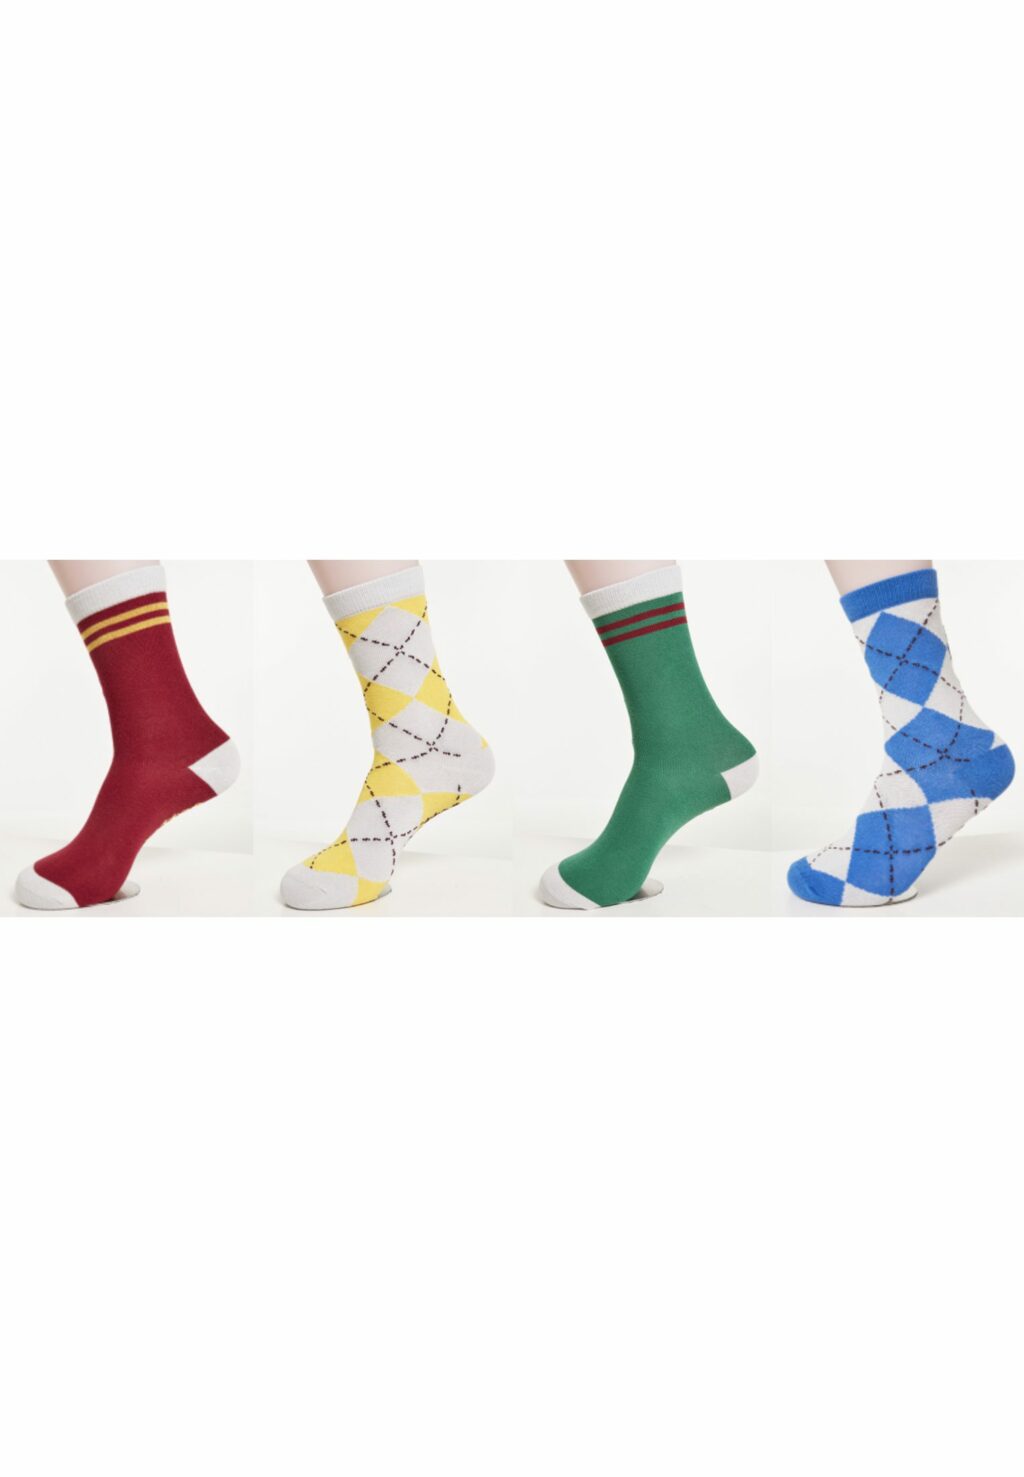 Harry Potter Team Socks 4-Pack multicolor MC1005